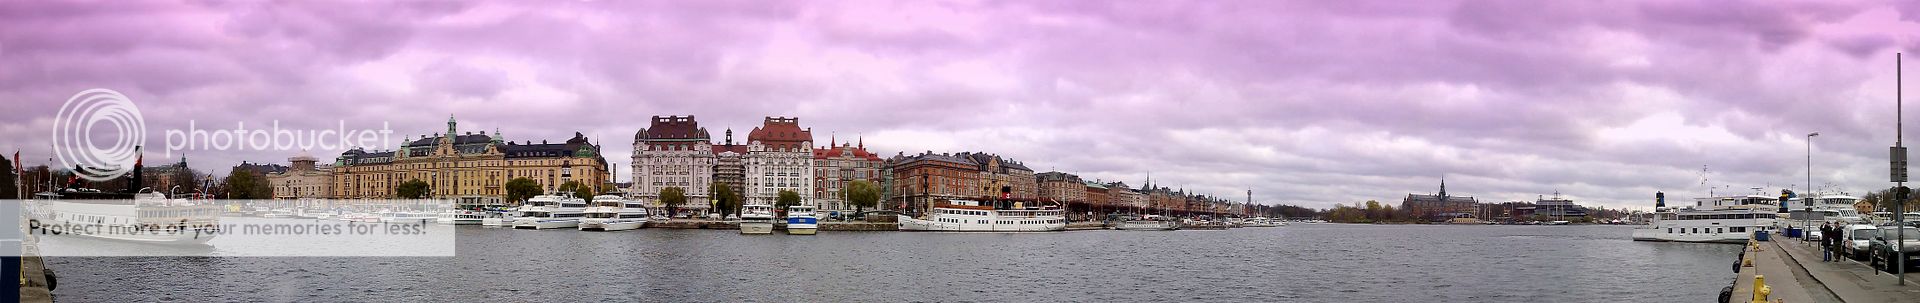 Stockholm2-2.jpg